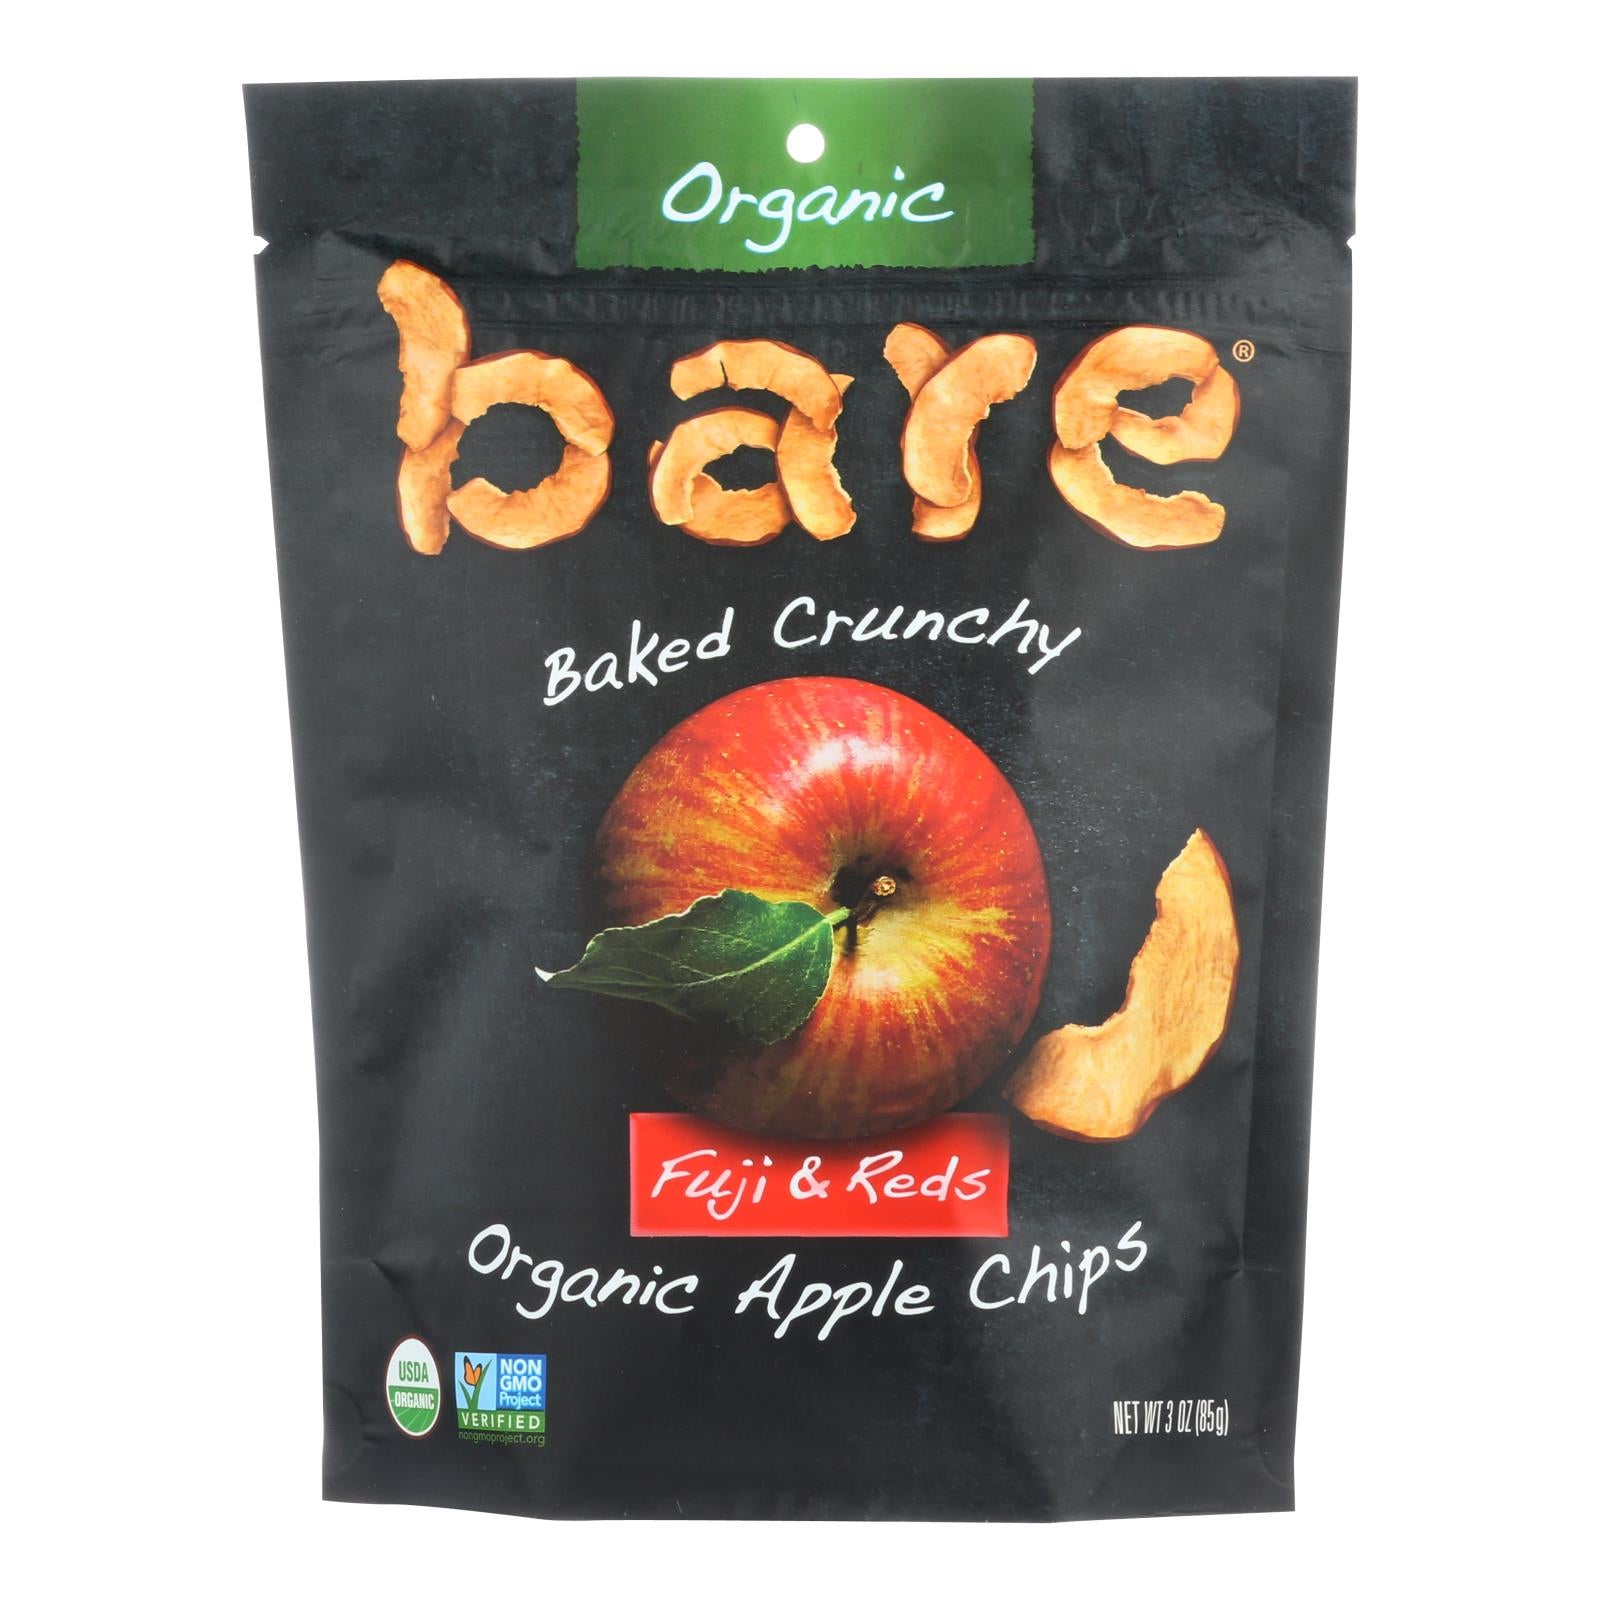 Bare Fruit, Bare Fruit Apple Chips - Organic - Crunchy - Fuji Red - 3 oz - case of 12 (Pack of 12)